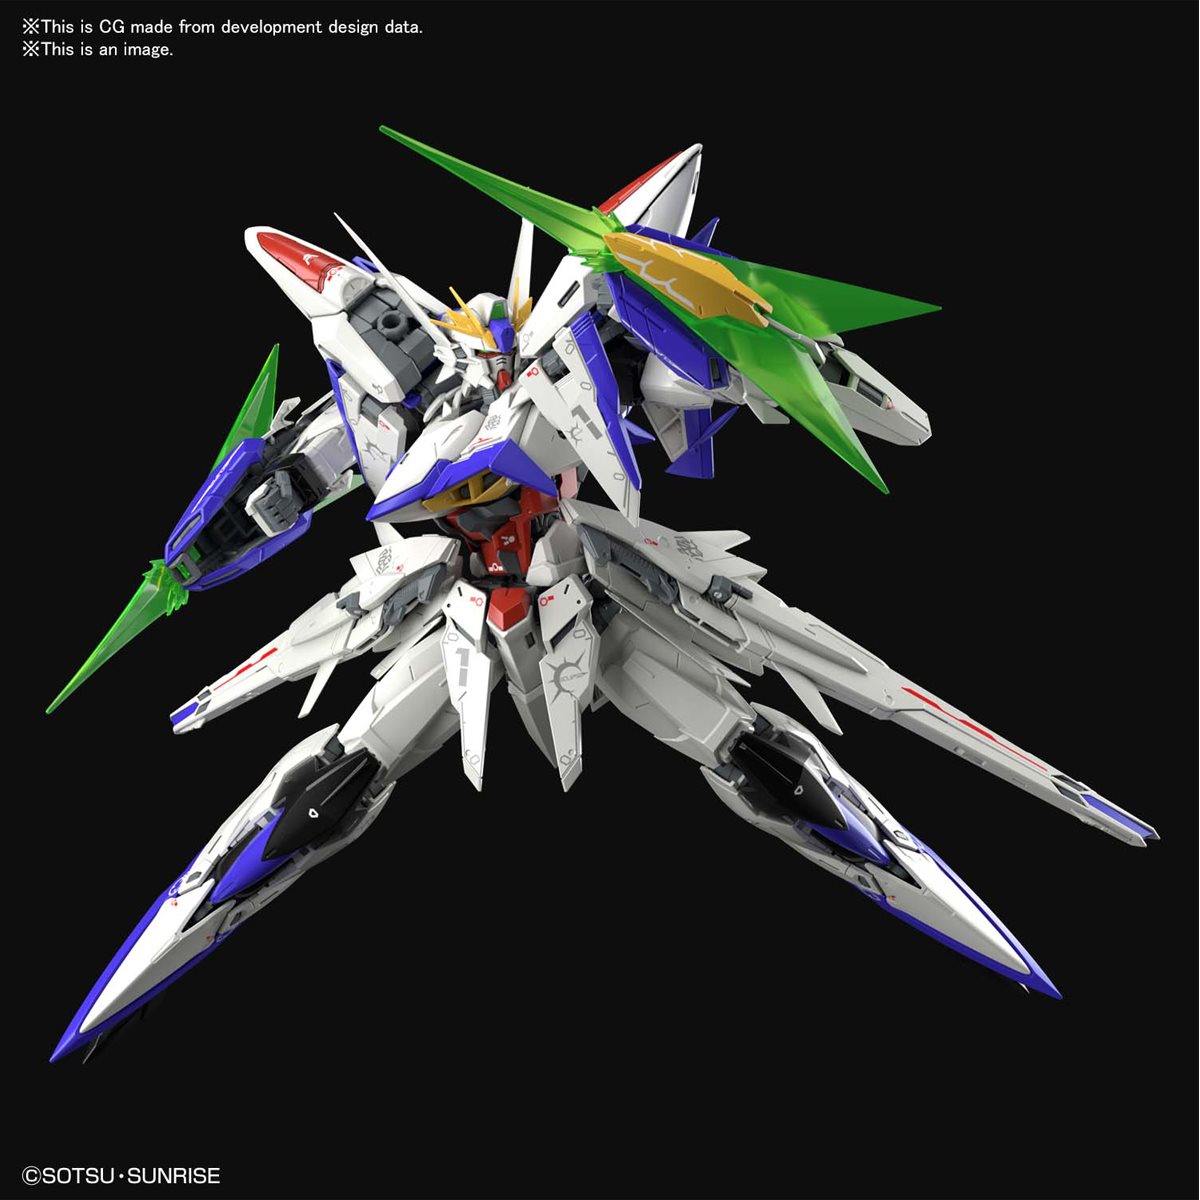 1/100 MG Eclipse Gundam